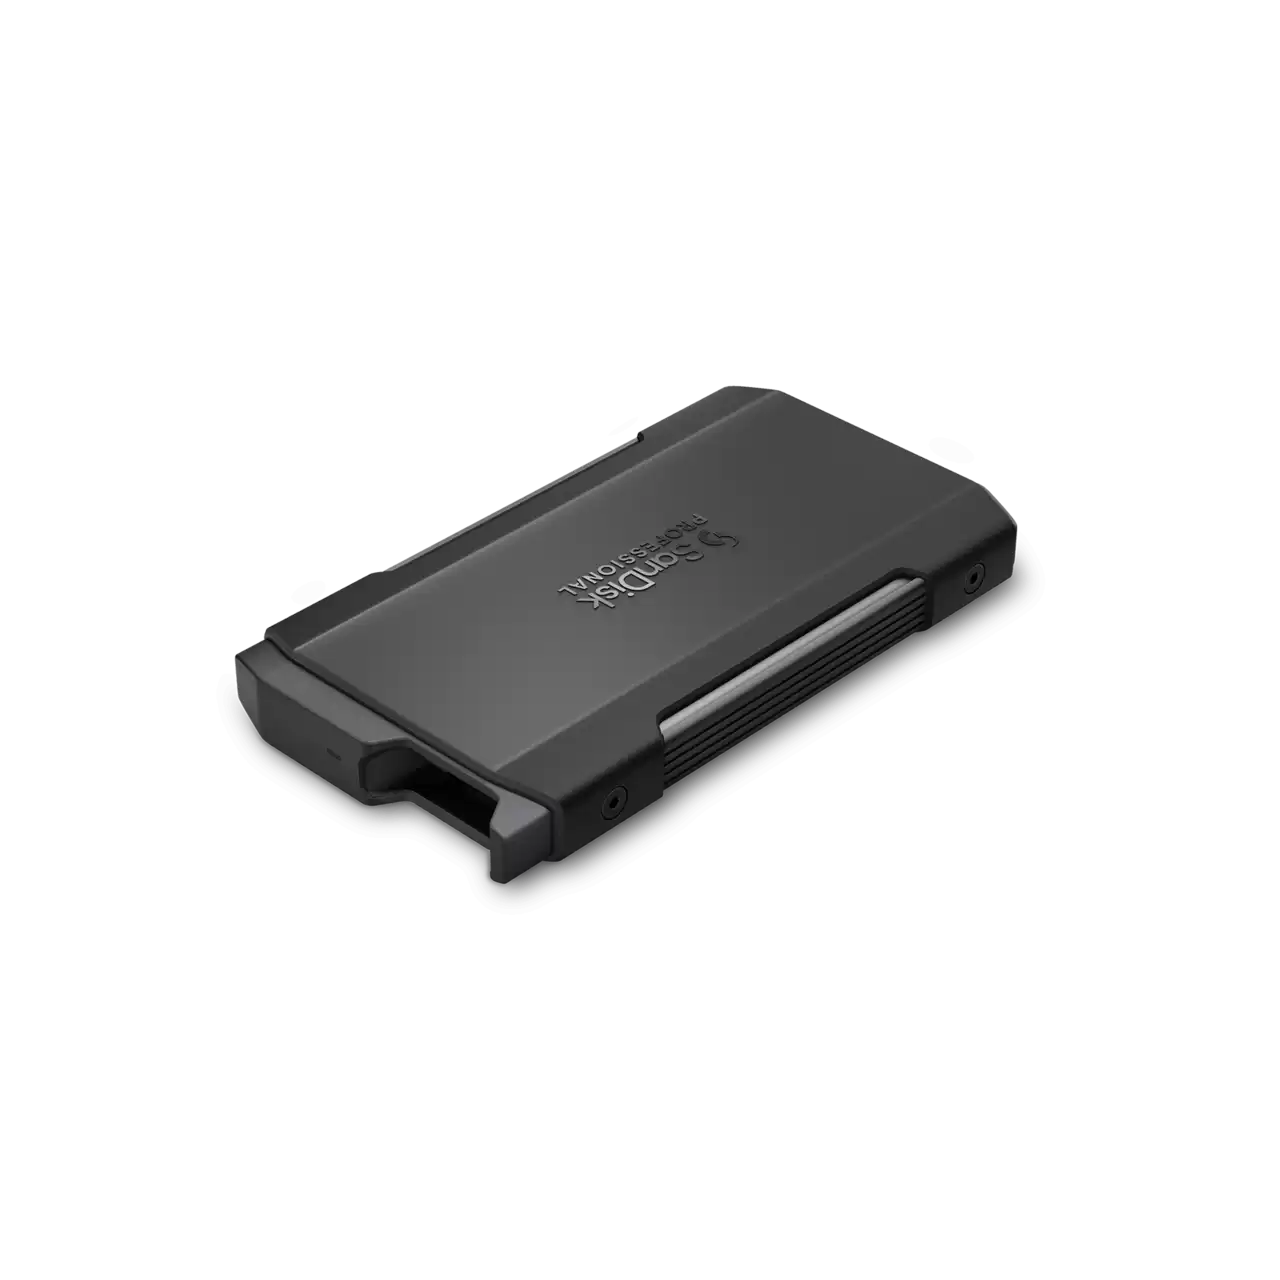 Disque SSD SanDisk Professional G-Drive ArmorLock